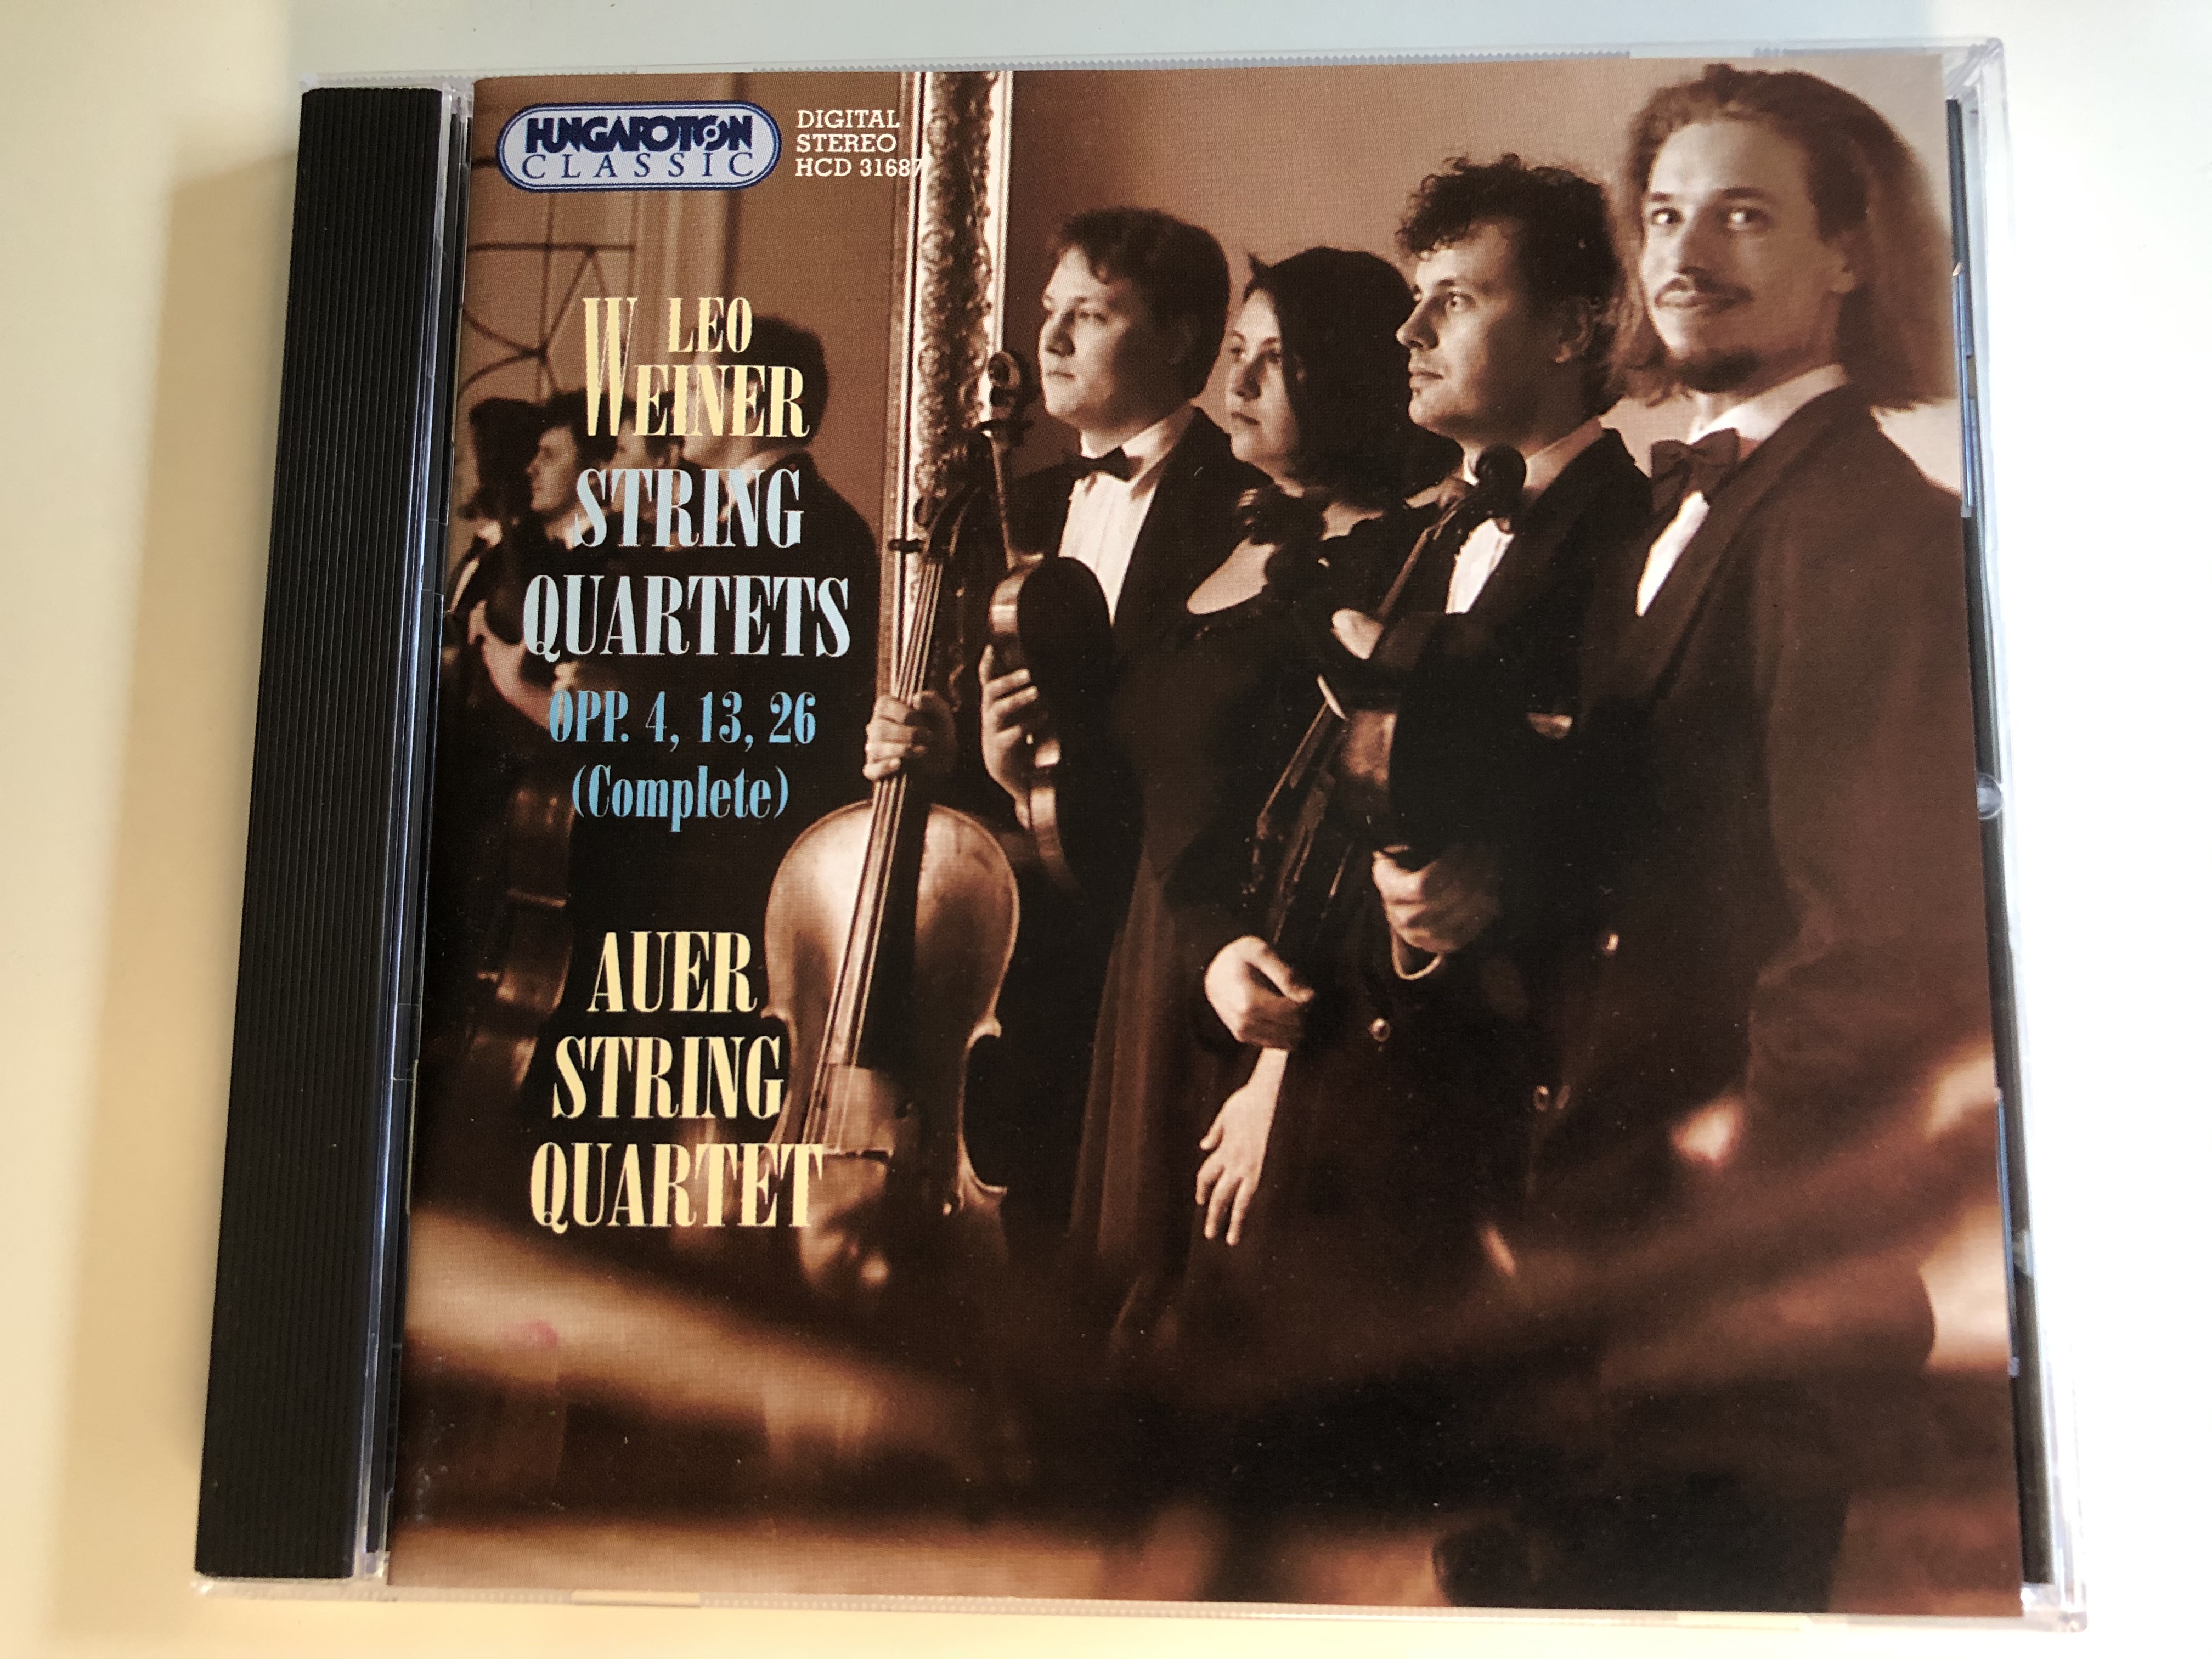 le-weiner-string-quartets-opp.-4-13-26-complete-auer-string-quartet-hungaroton-classic-audio-cd-1997-stereo-hcd-31687-1-.jpg